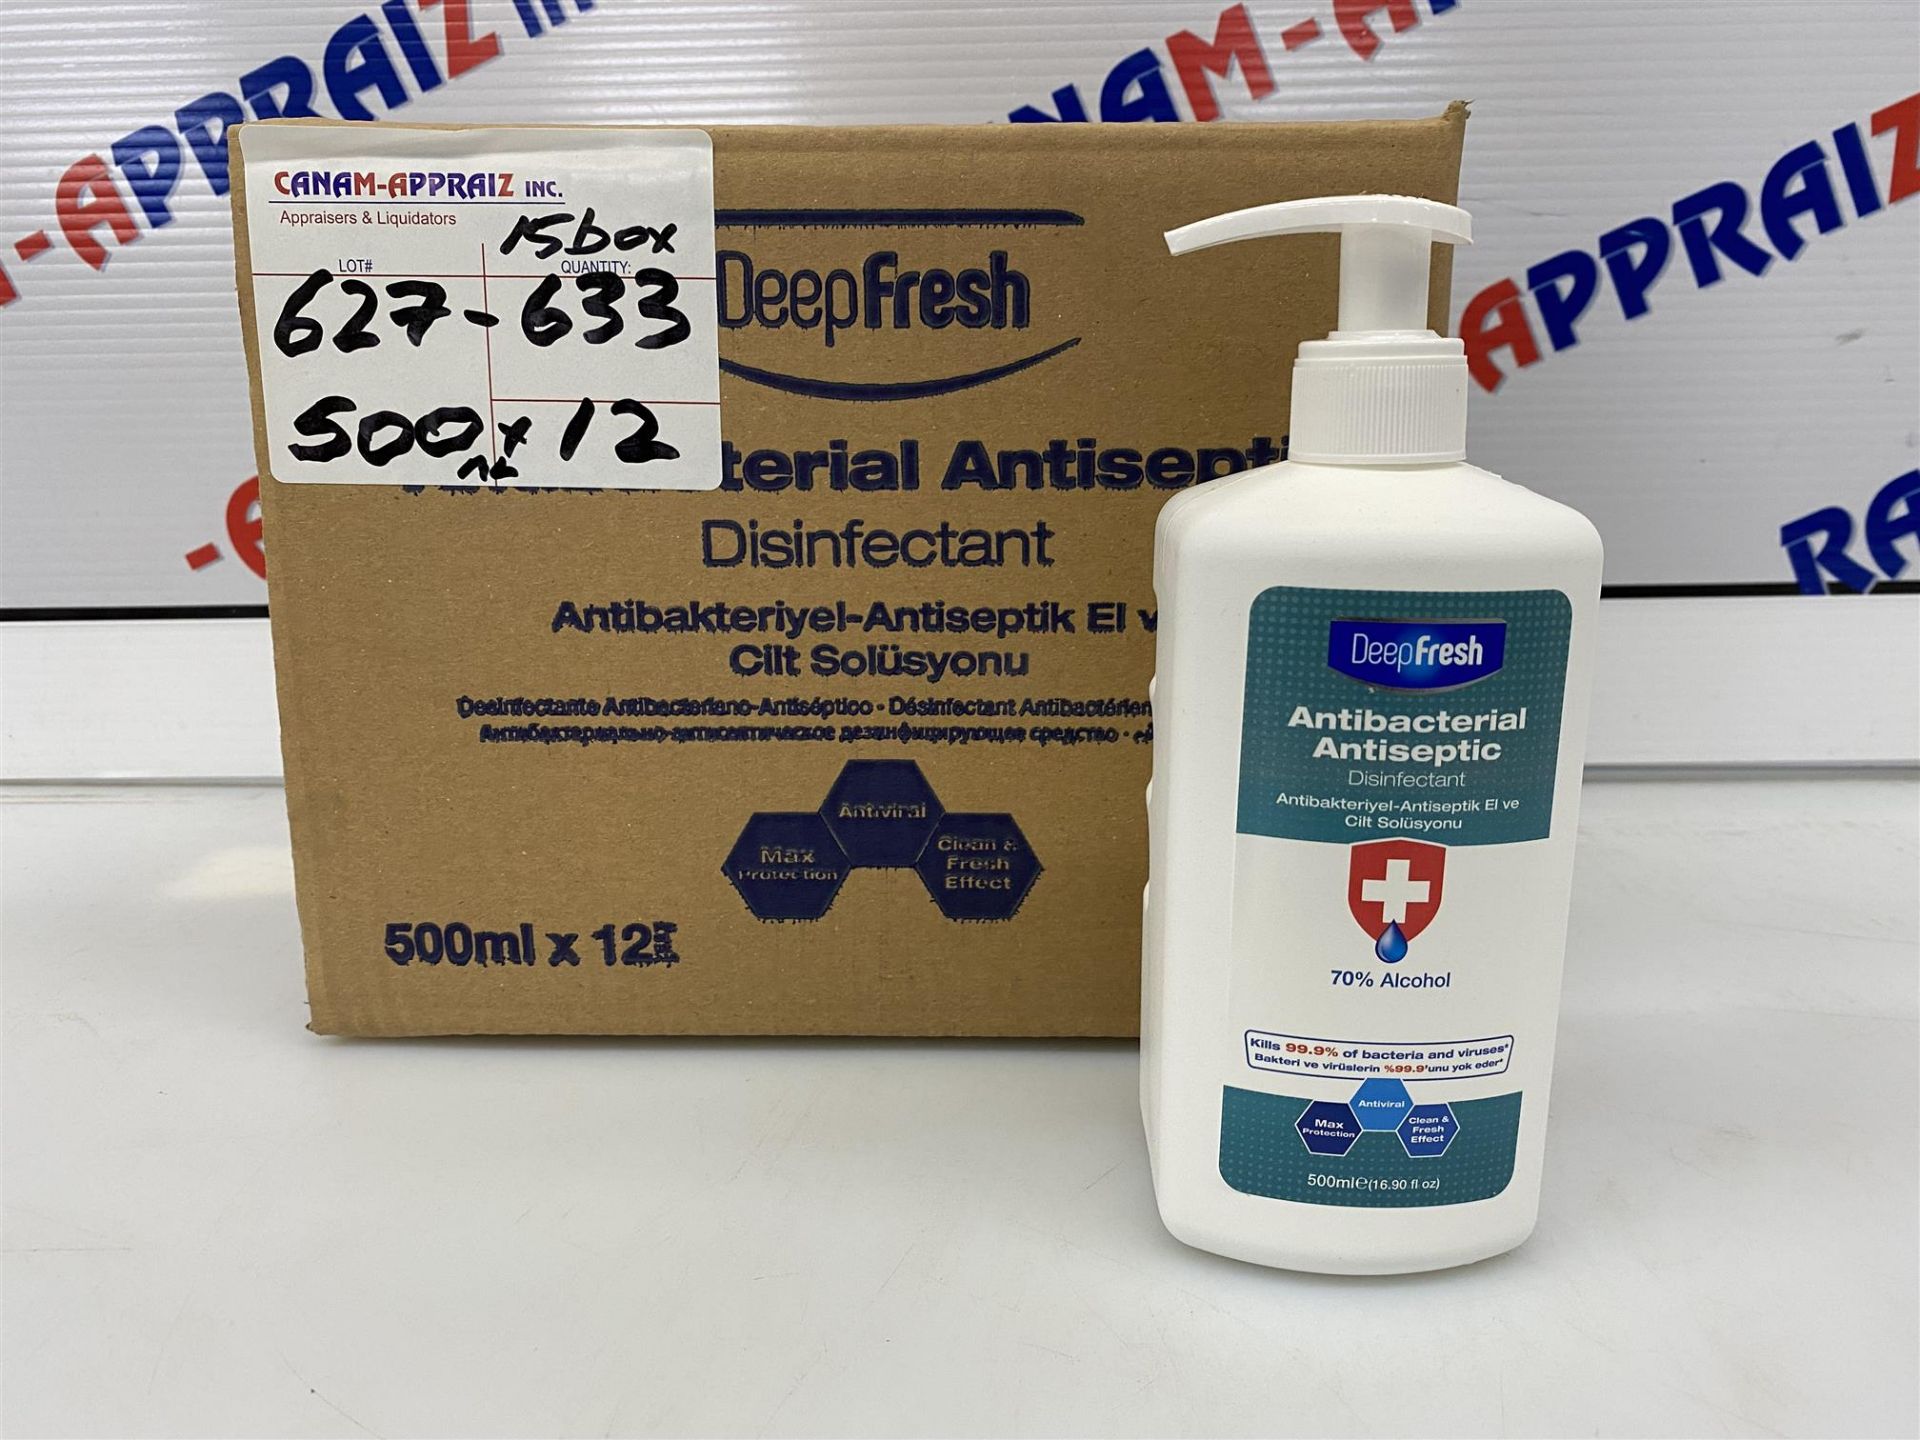 Deep Fresh - Antibacterial Antiseptic Disinfectant - 500ml x 12/box - 15BOXES